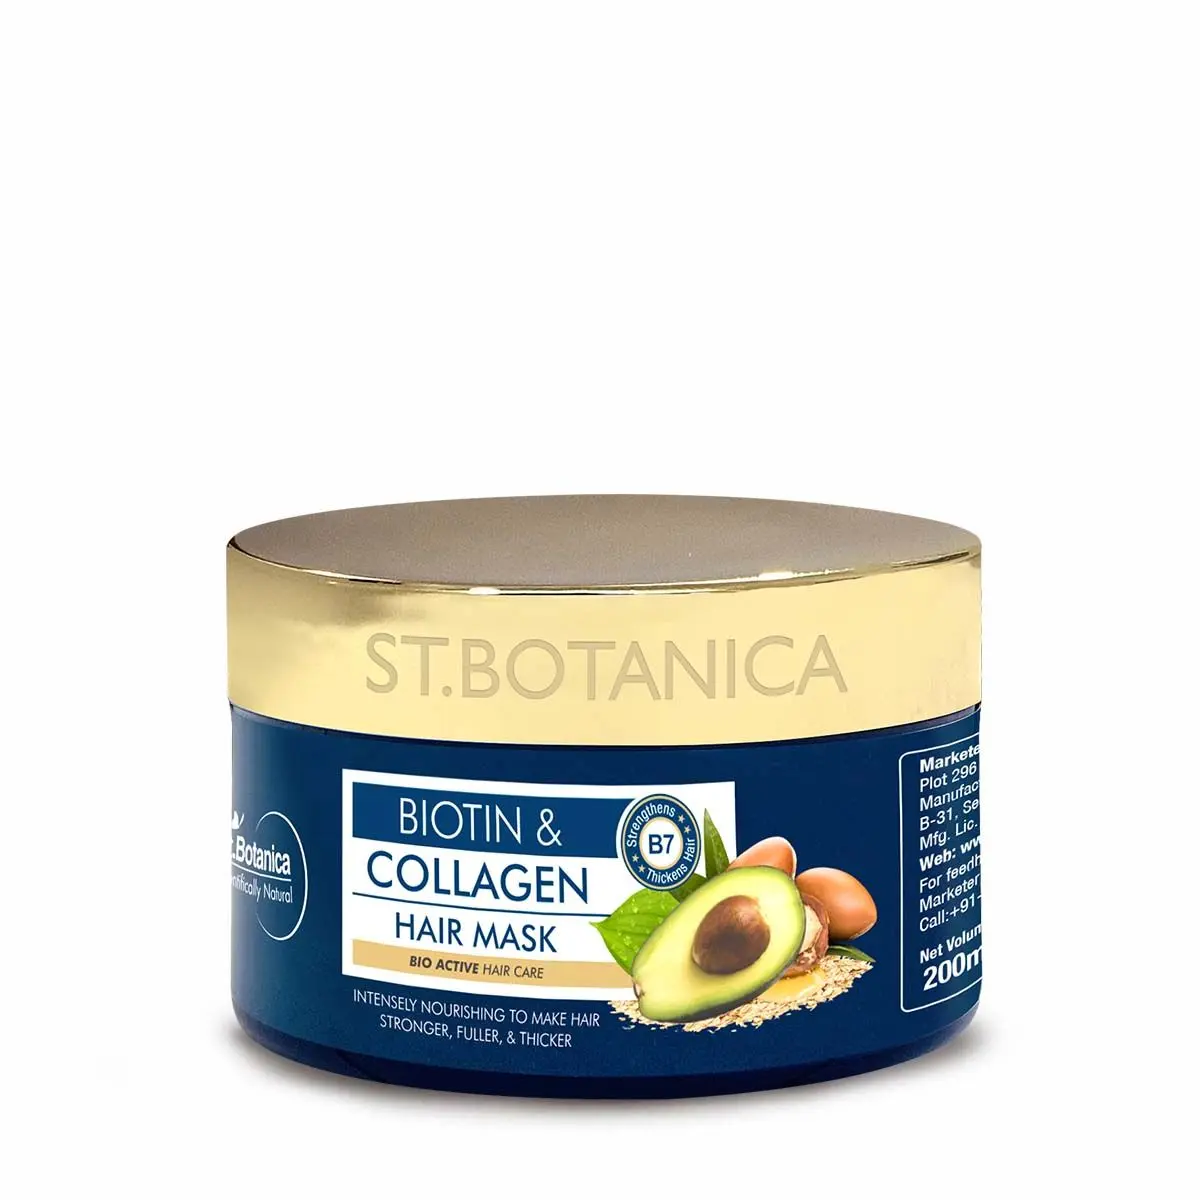 StBotanica Biotin & Collagen Hair Mask - For Stronger, Fuller and Thicker Hair, 200 ml